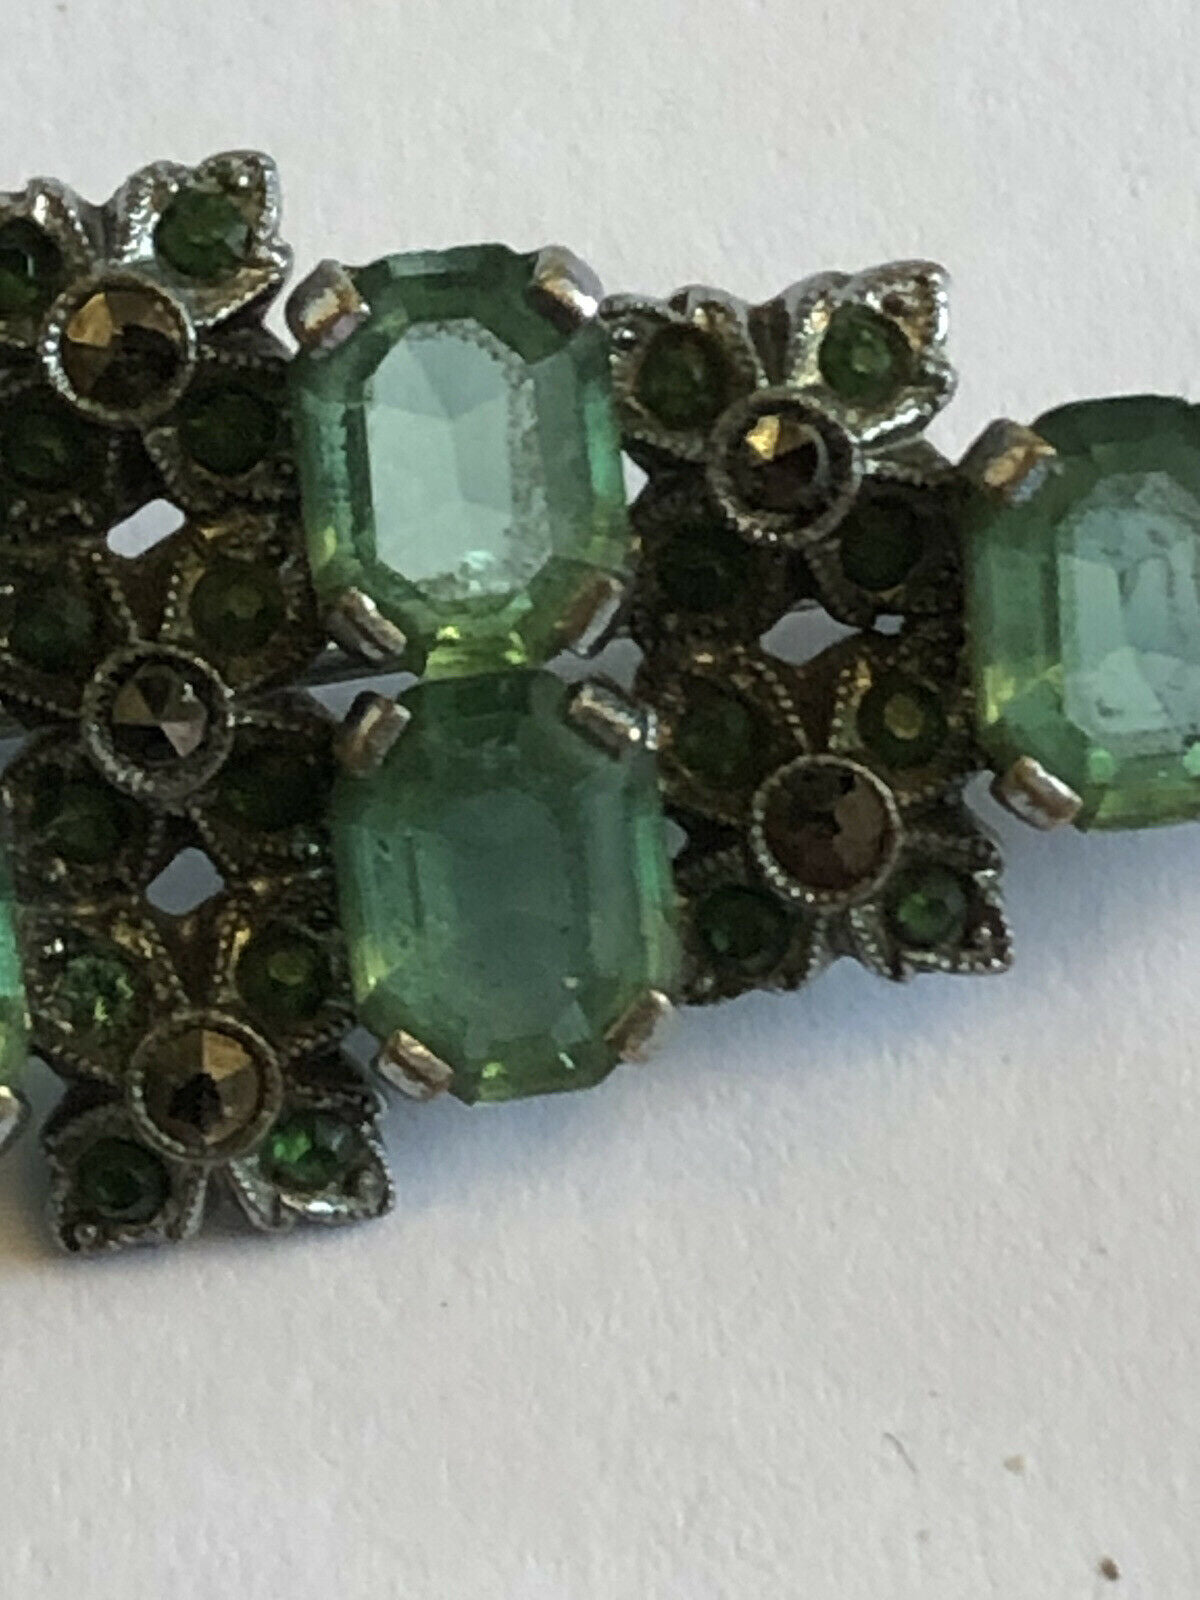 Vintage Old Czech Crystal Detailed Brooch